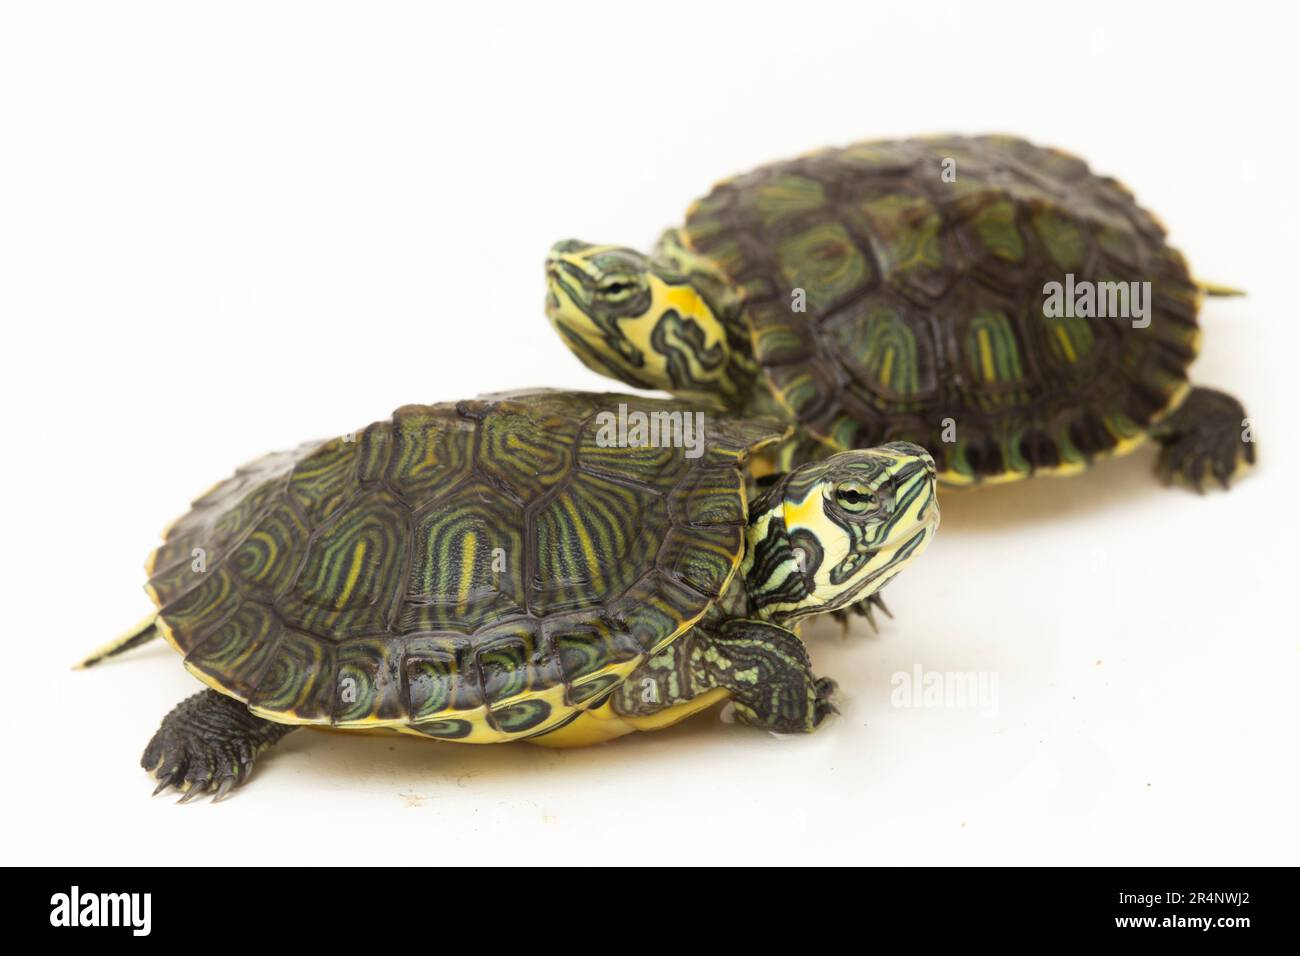 The yellow-bellied slider turtle (Trachemys scripta scripta) isolated on white background Stock Photo